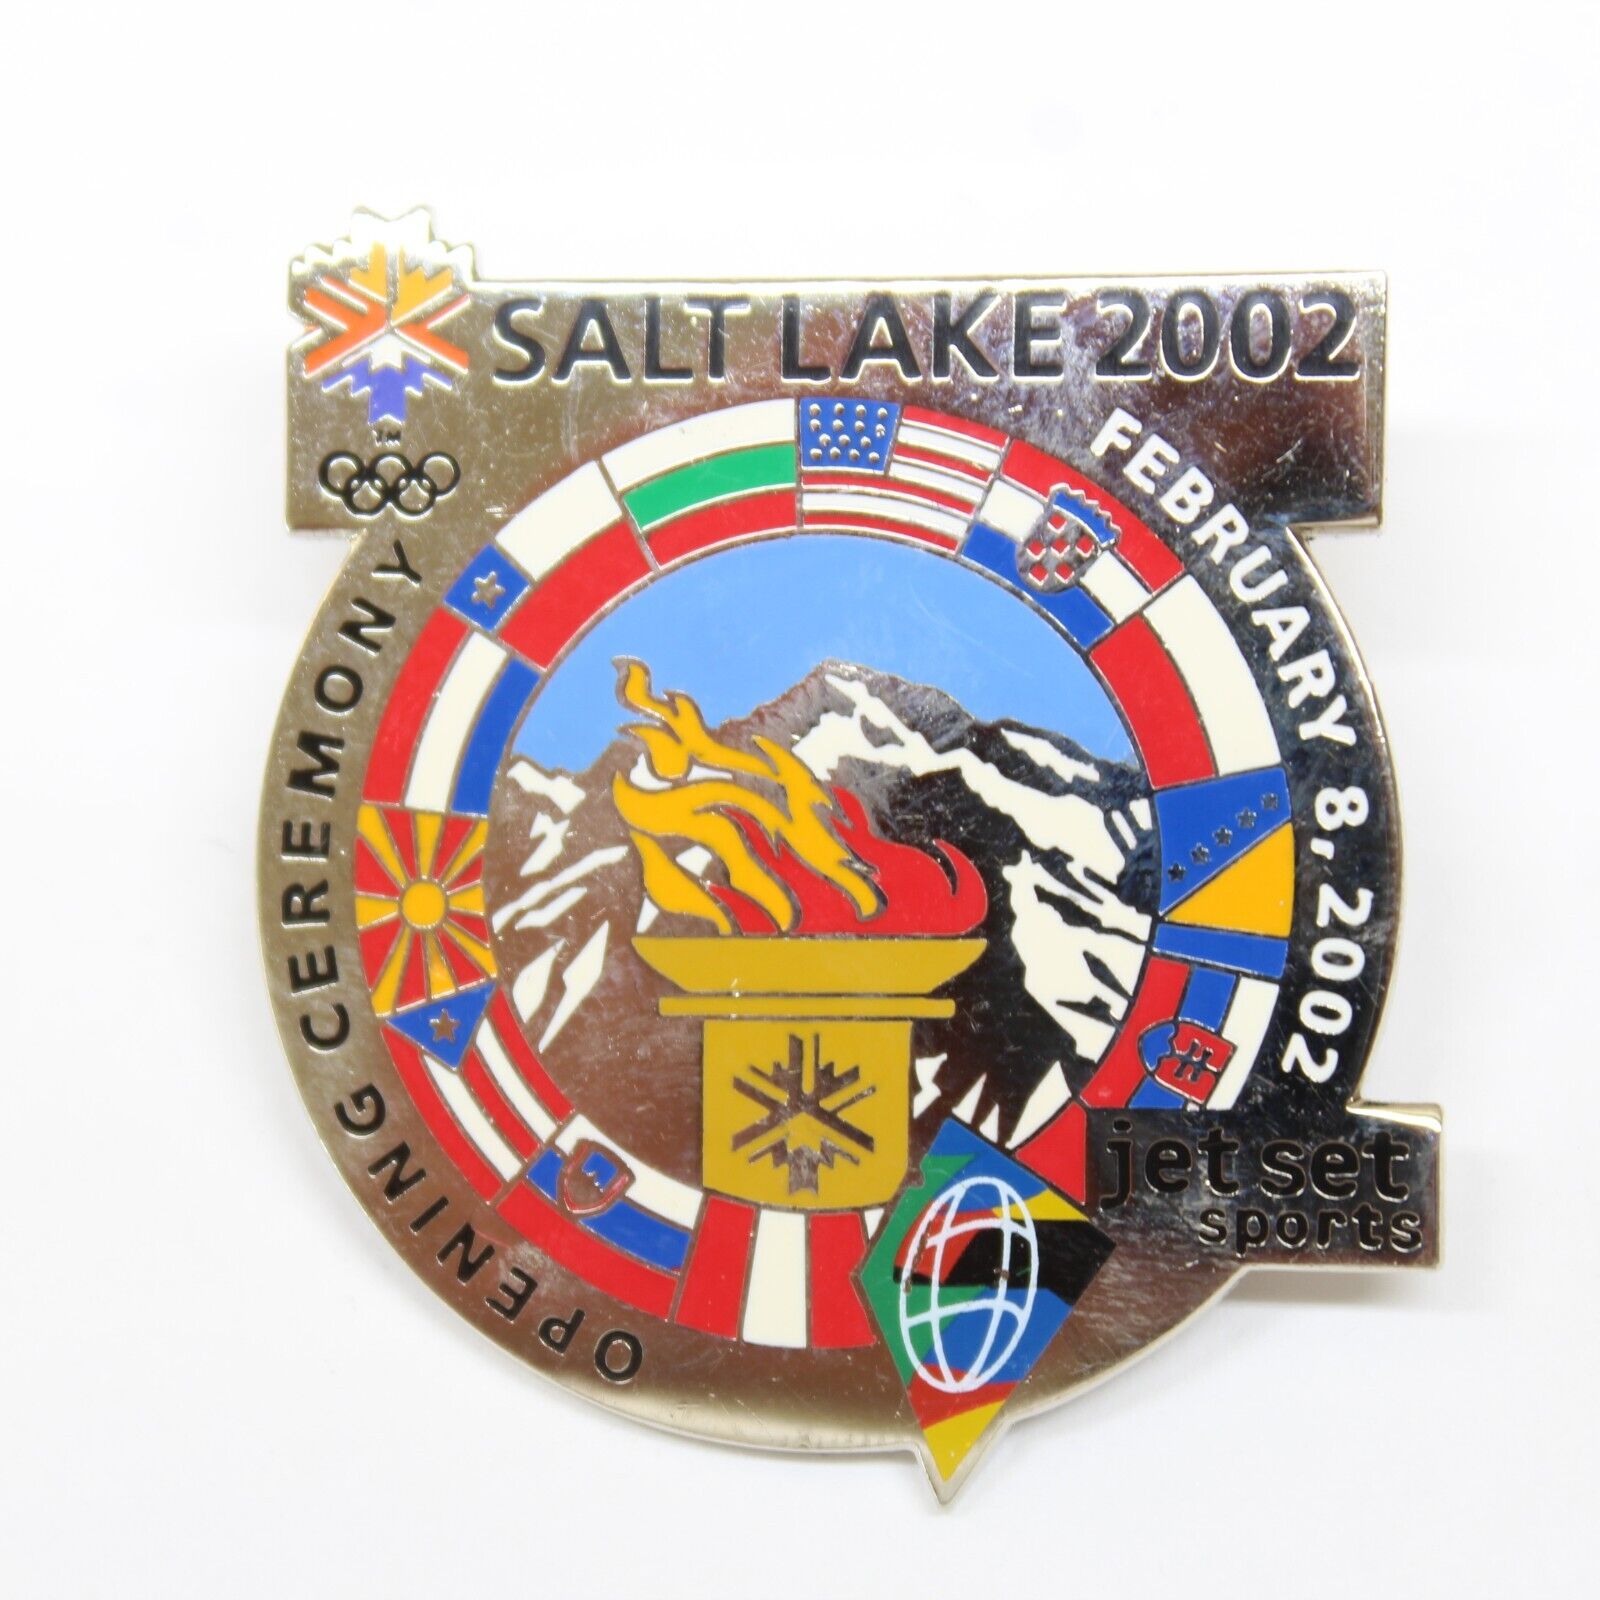 Salt Lake 2002 Opening Ceremony February 8 2002 Jet Set Sports Pin Lapel